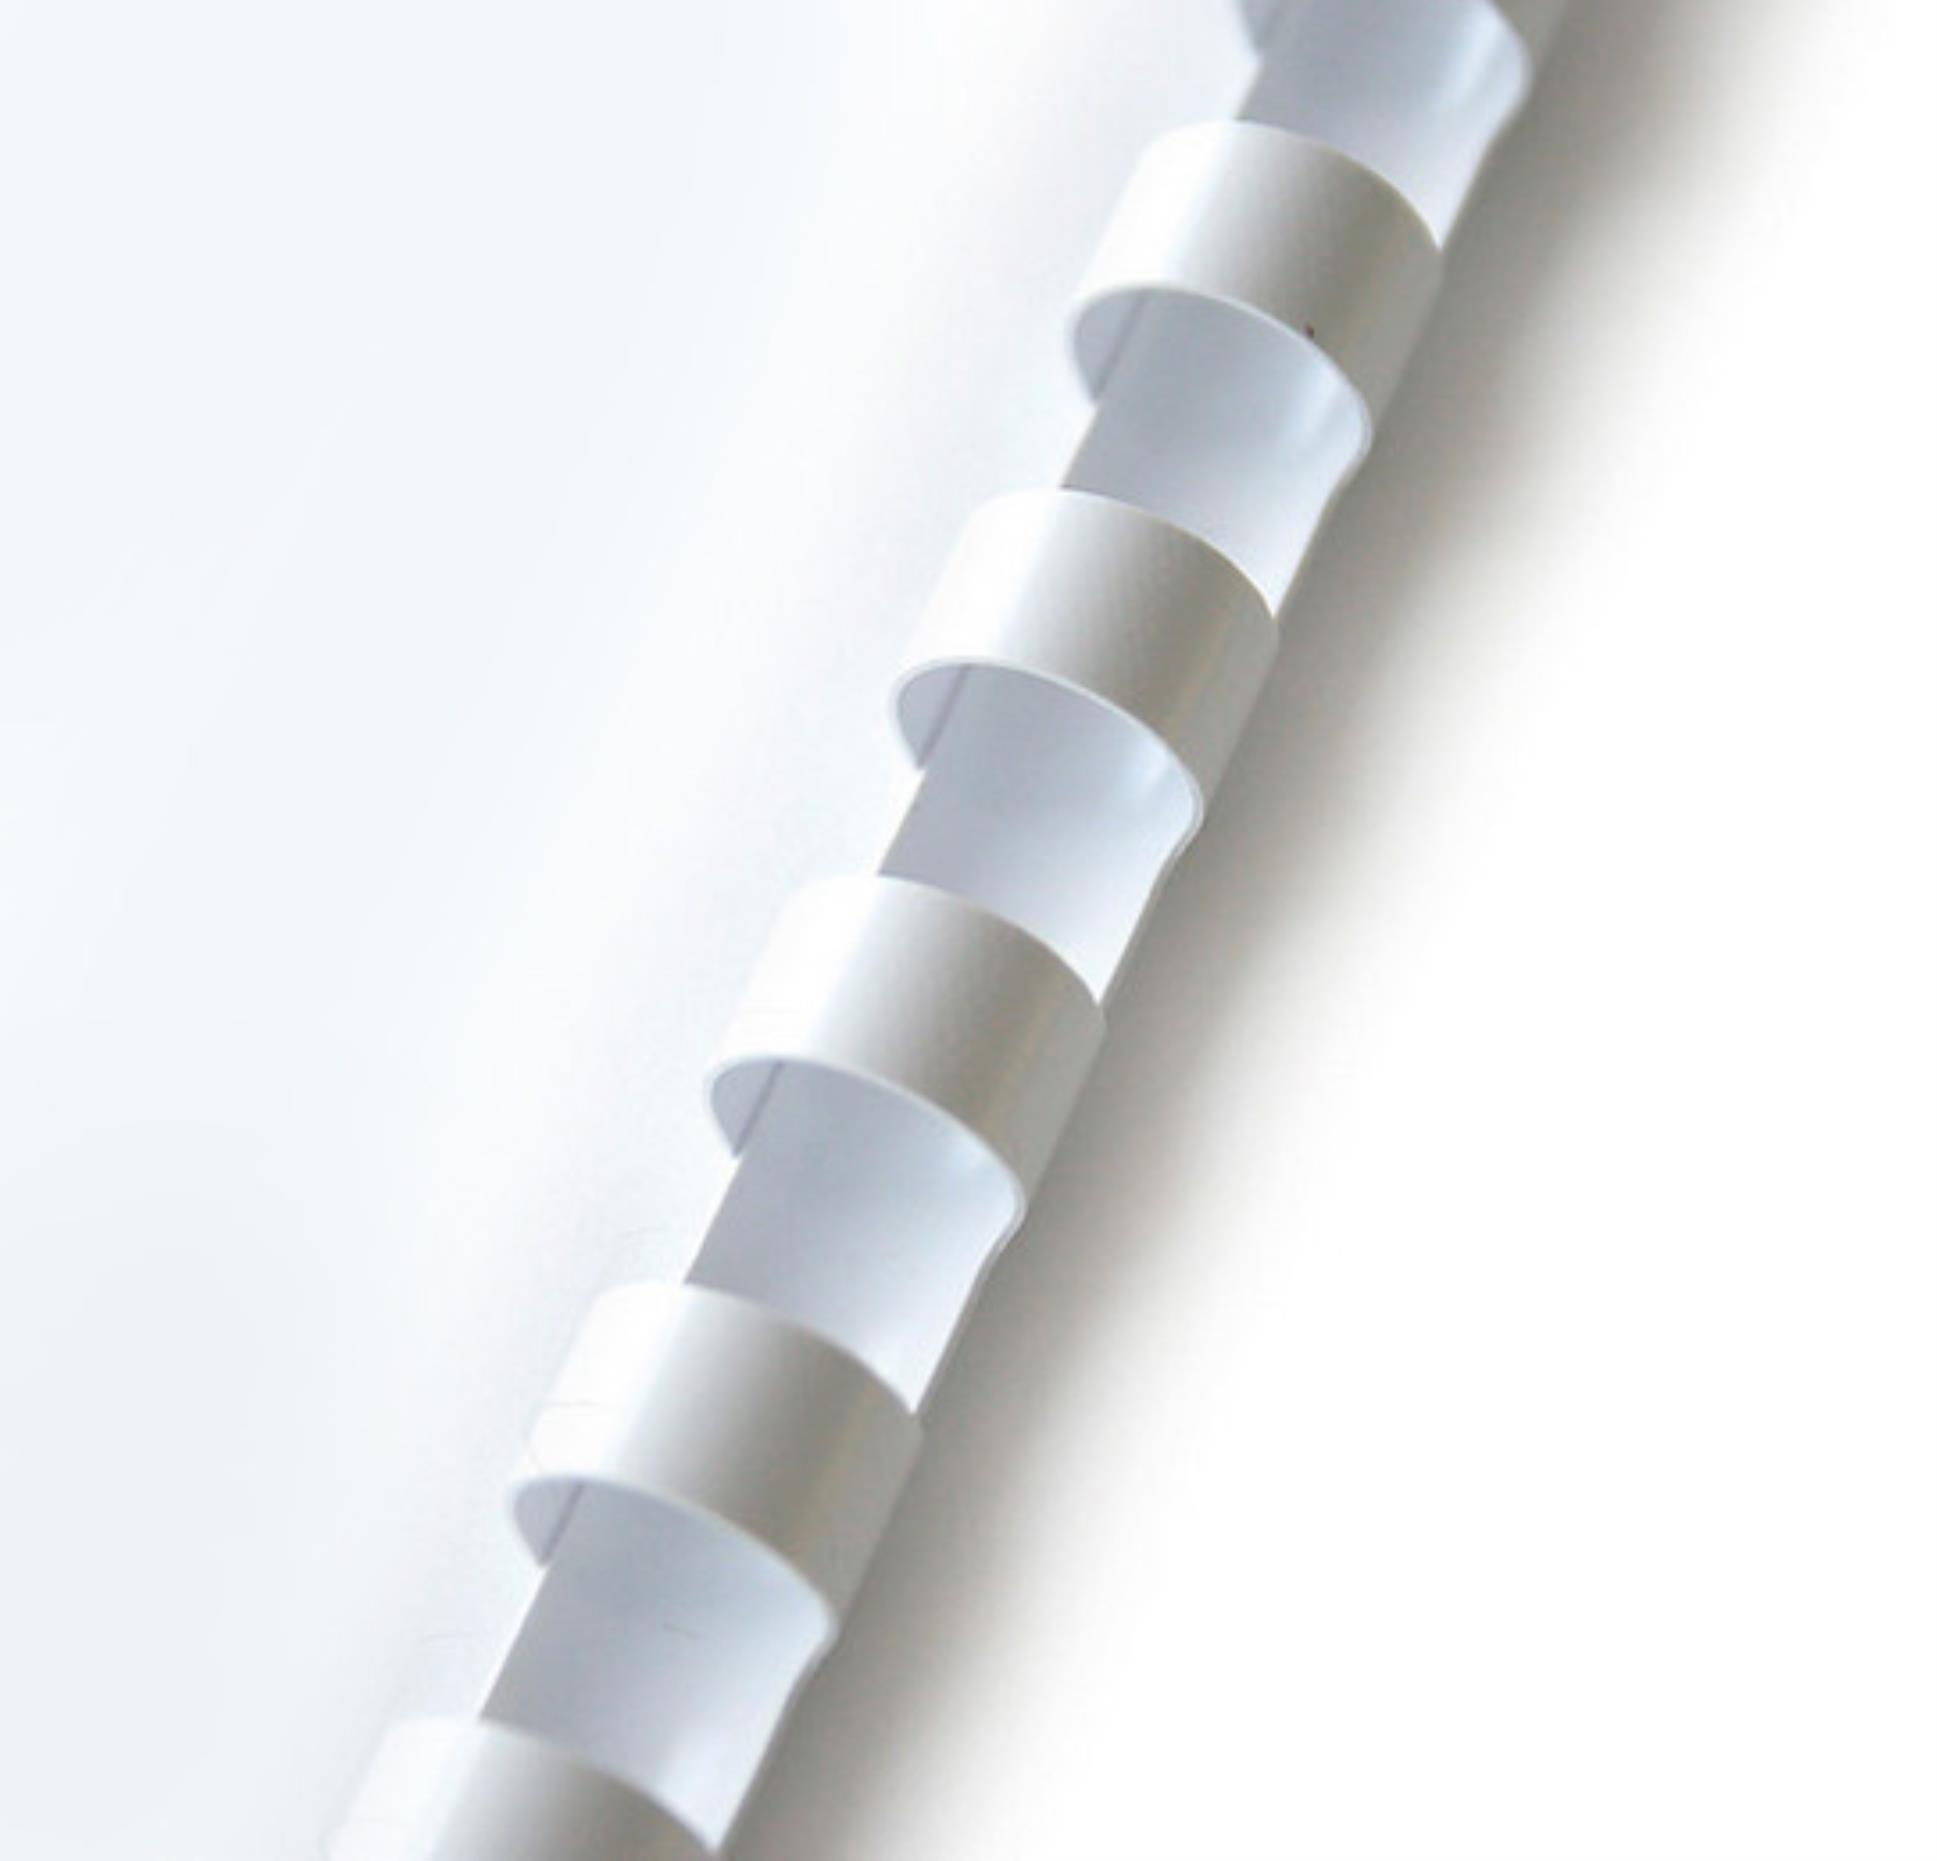 Plastové hřbety Q-Connect, 12 mm, bílé, 100 ks